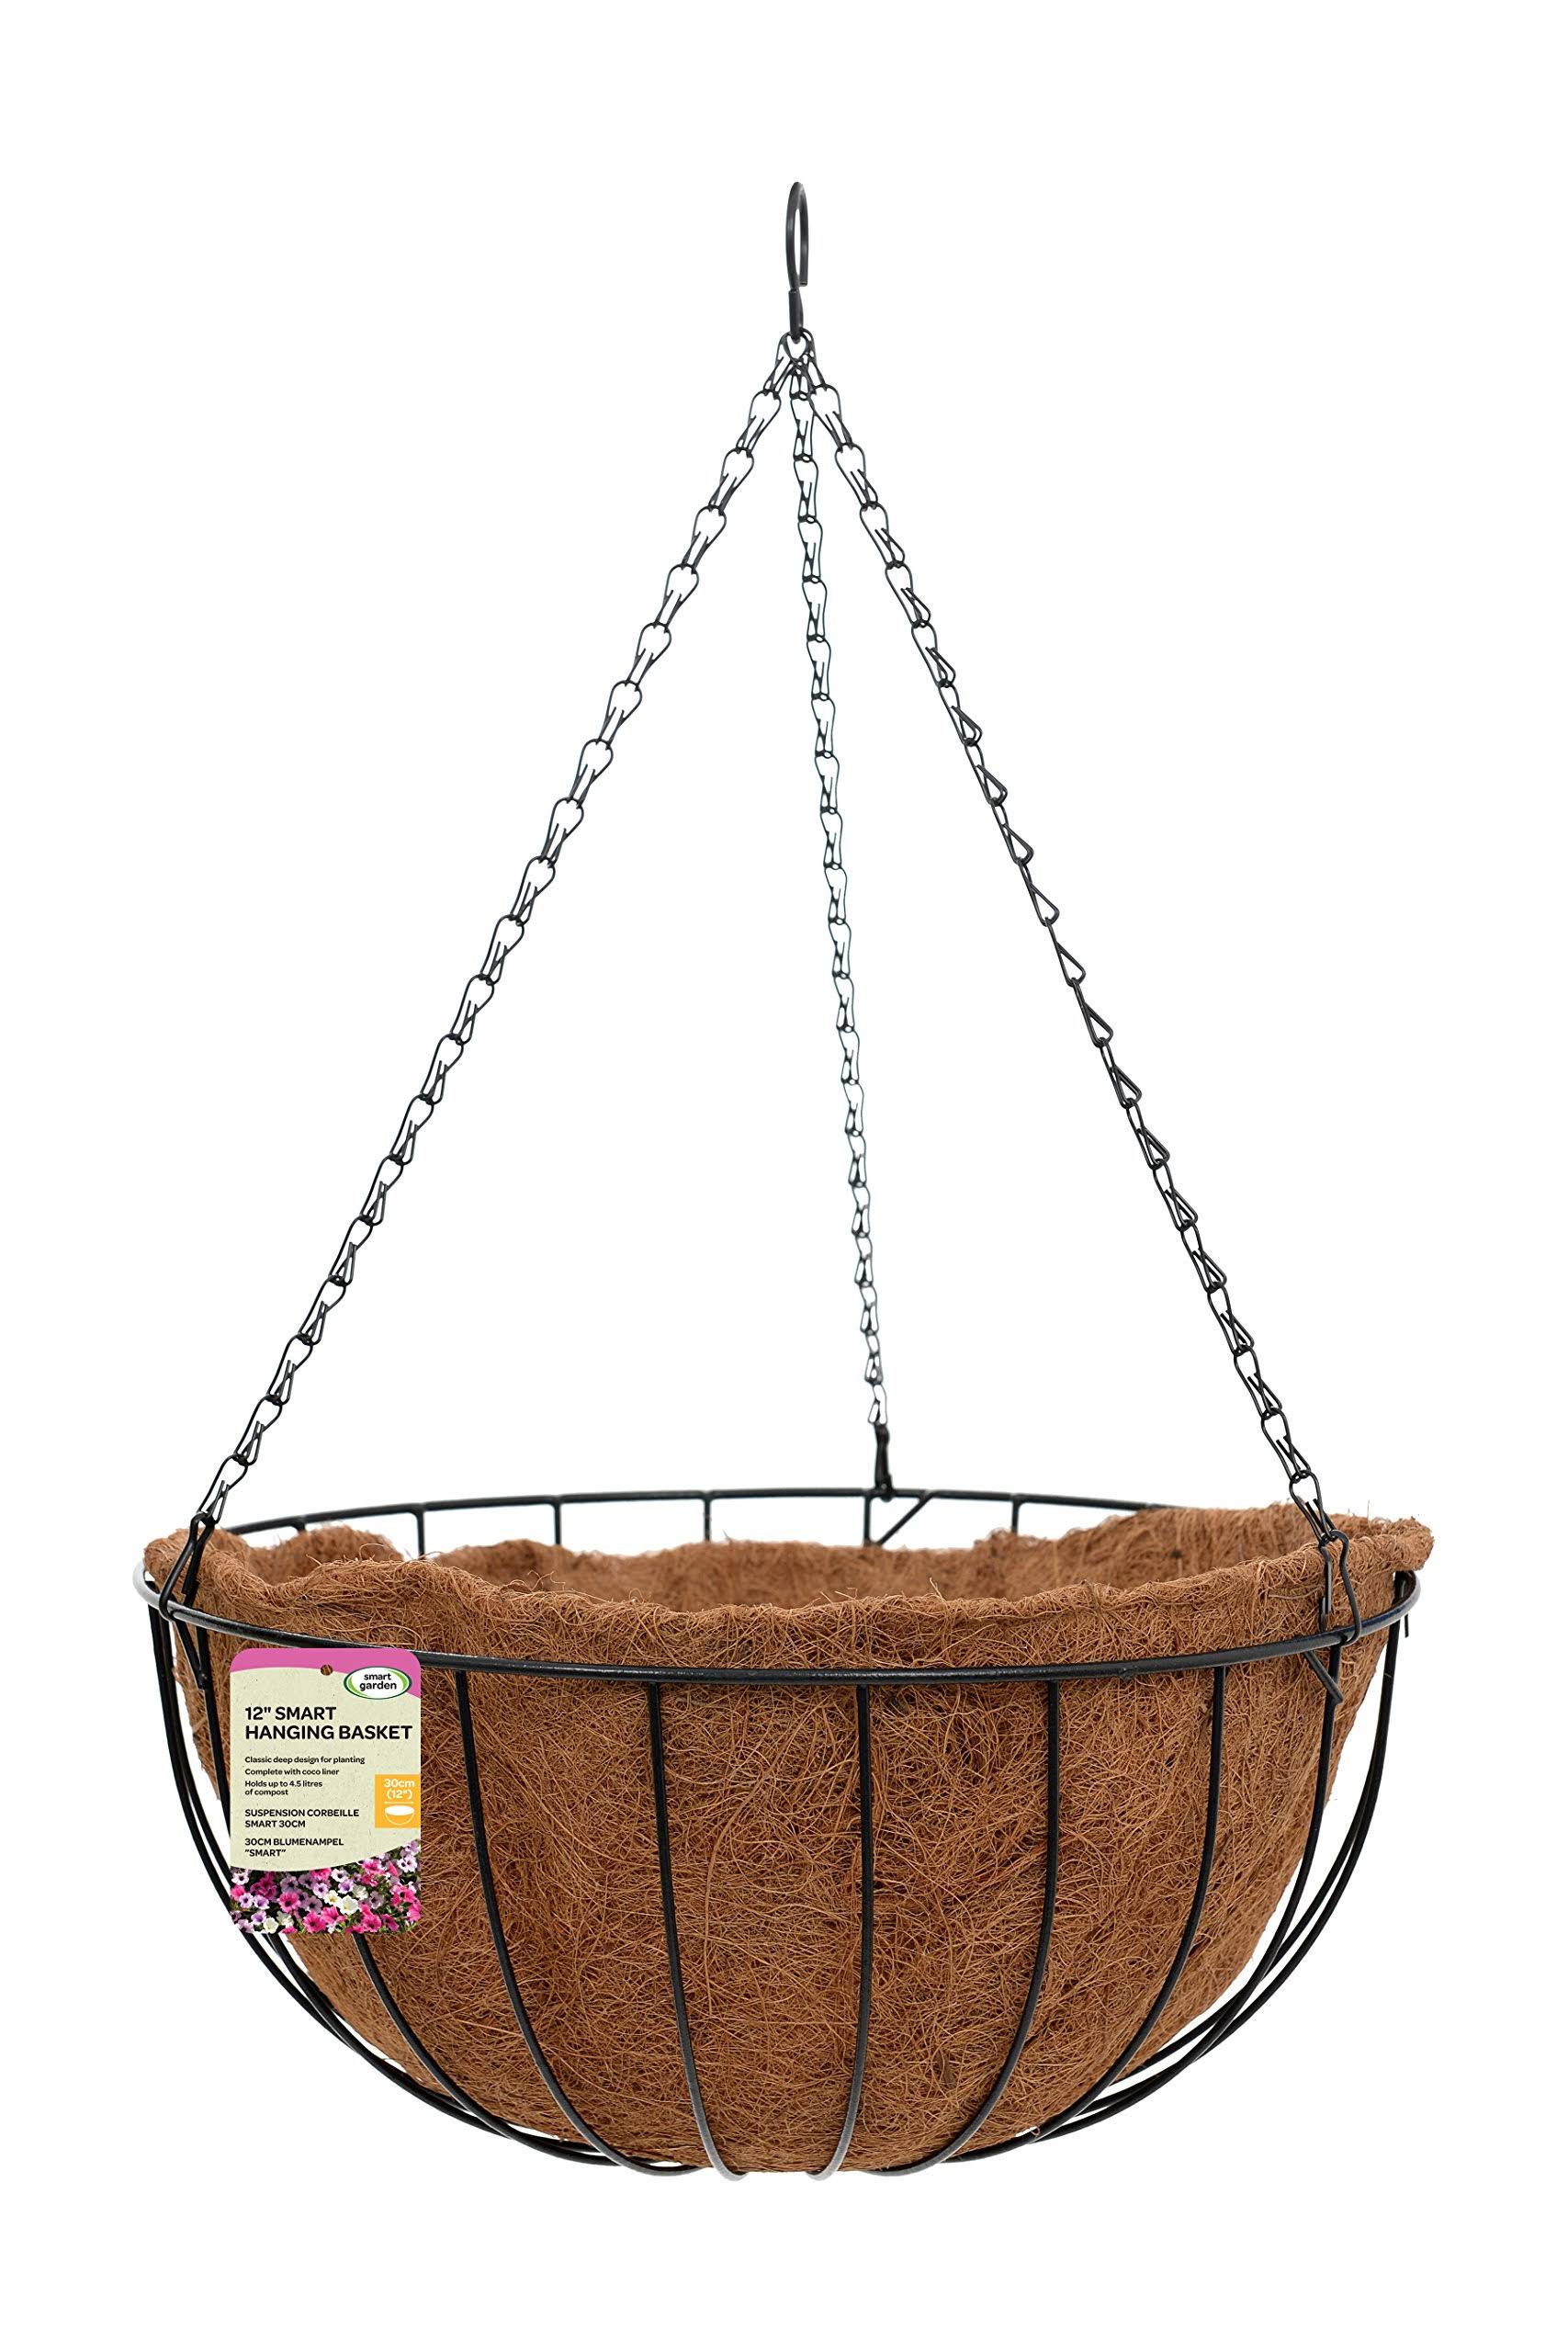 Smart Garden Hanging Basket 12"